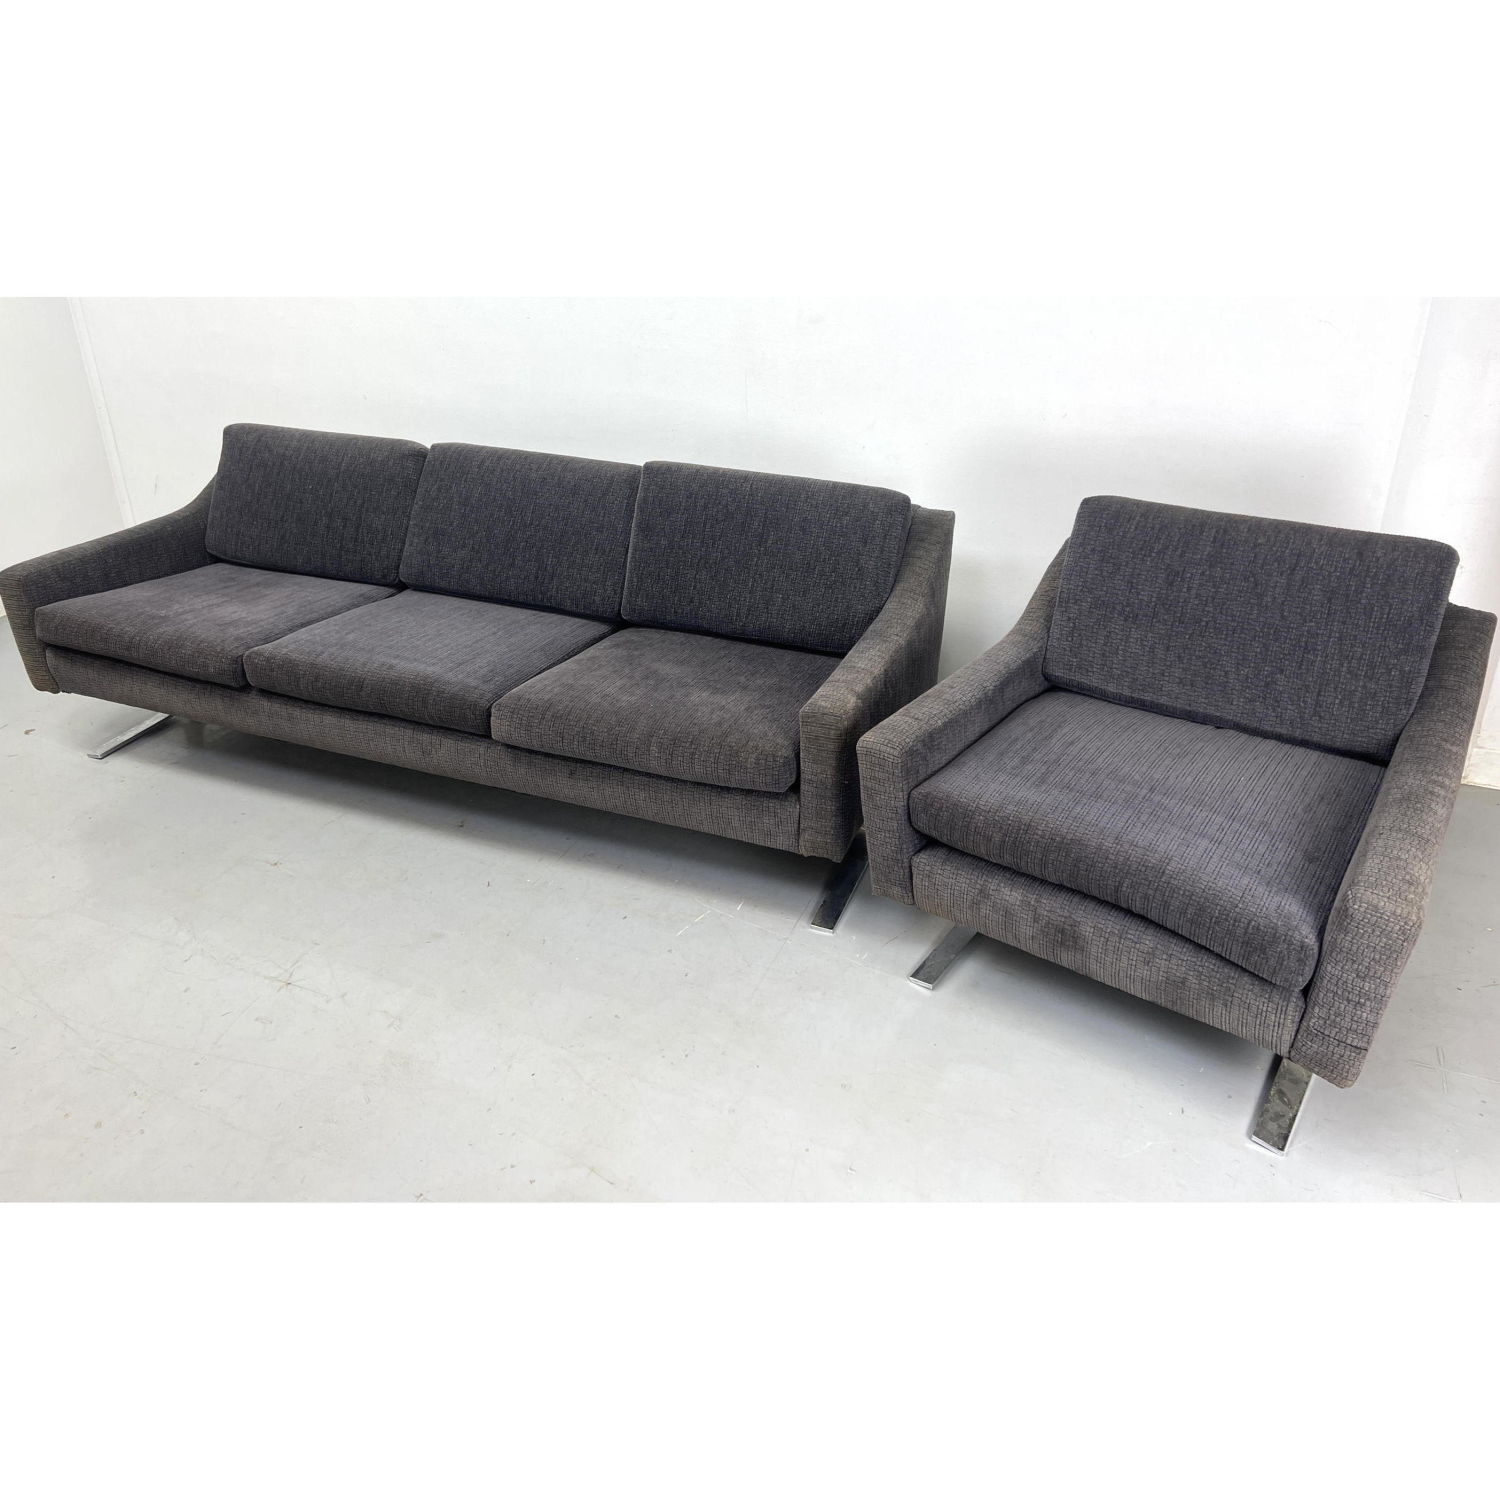 2pc Milo Baughman style Sofa Lounge 3ad690